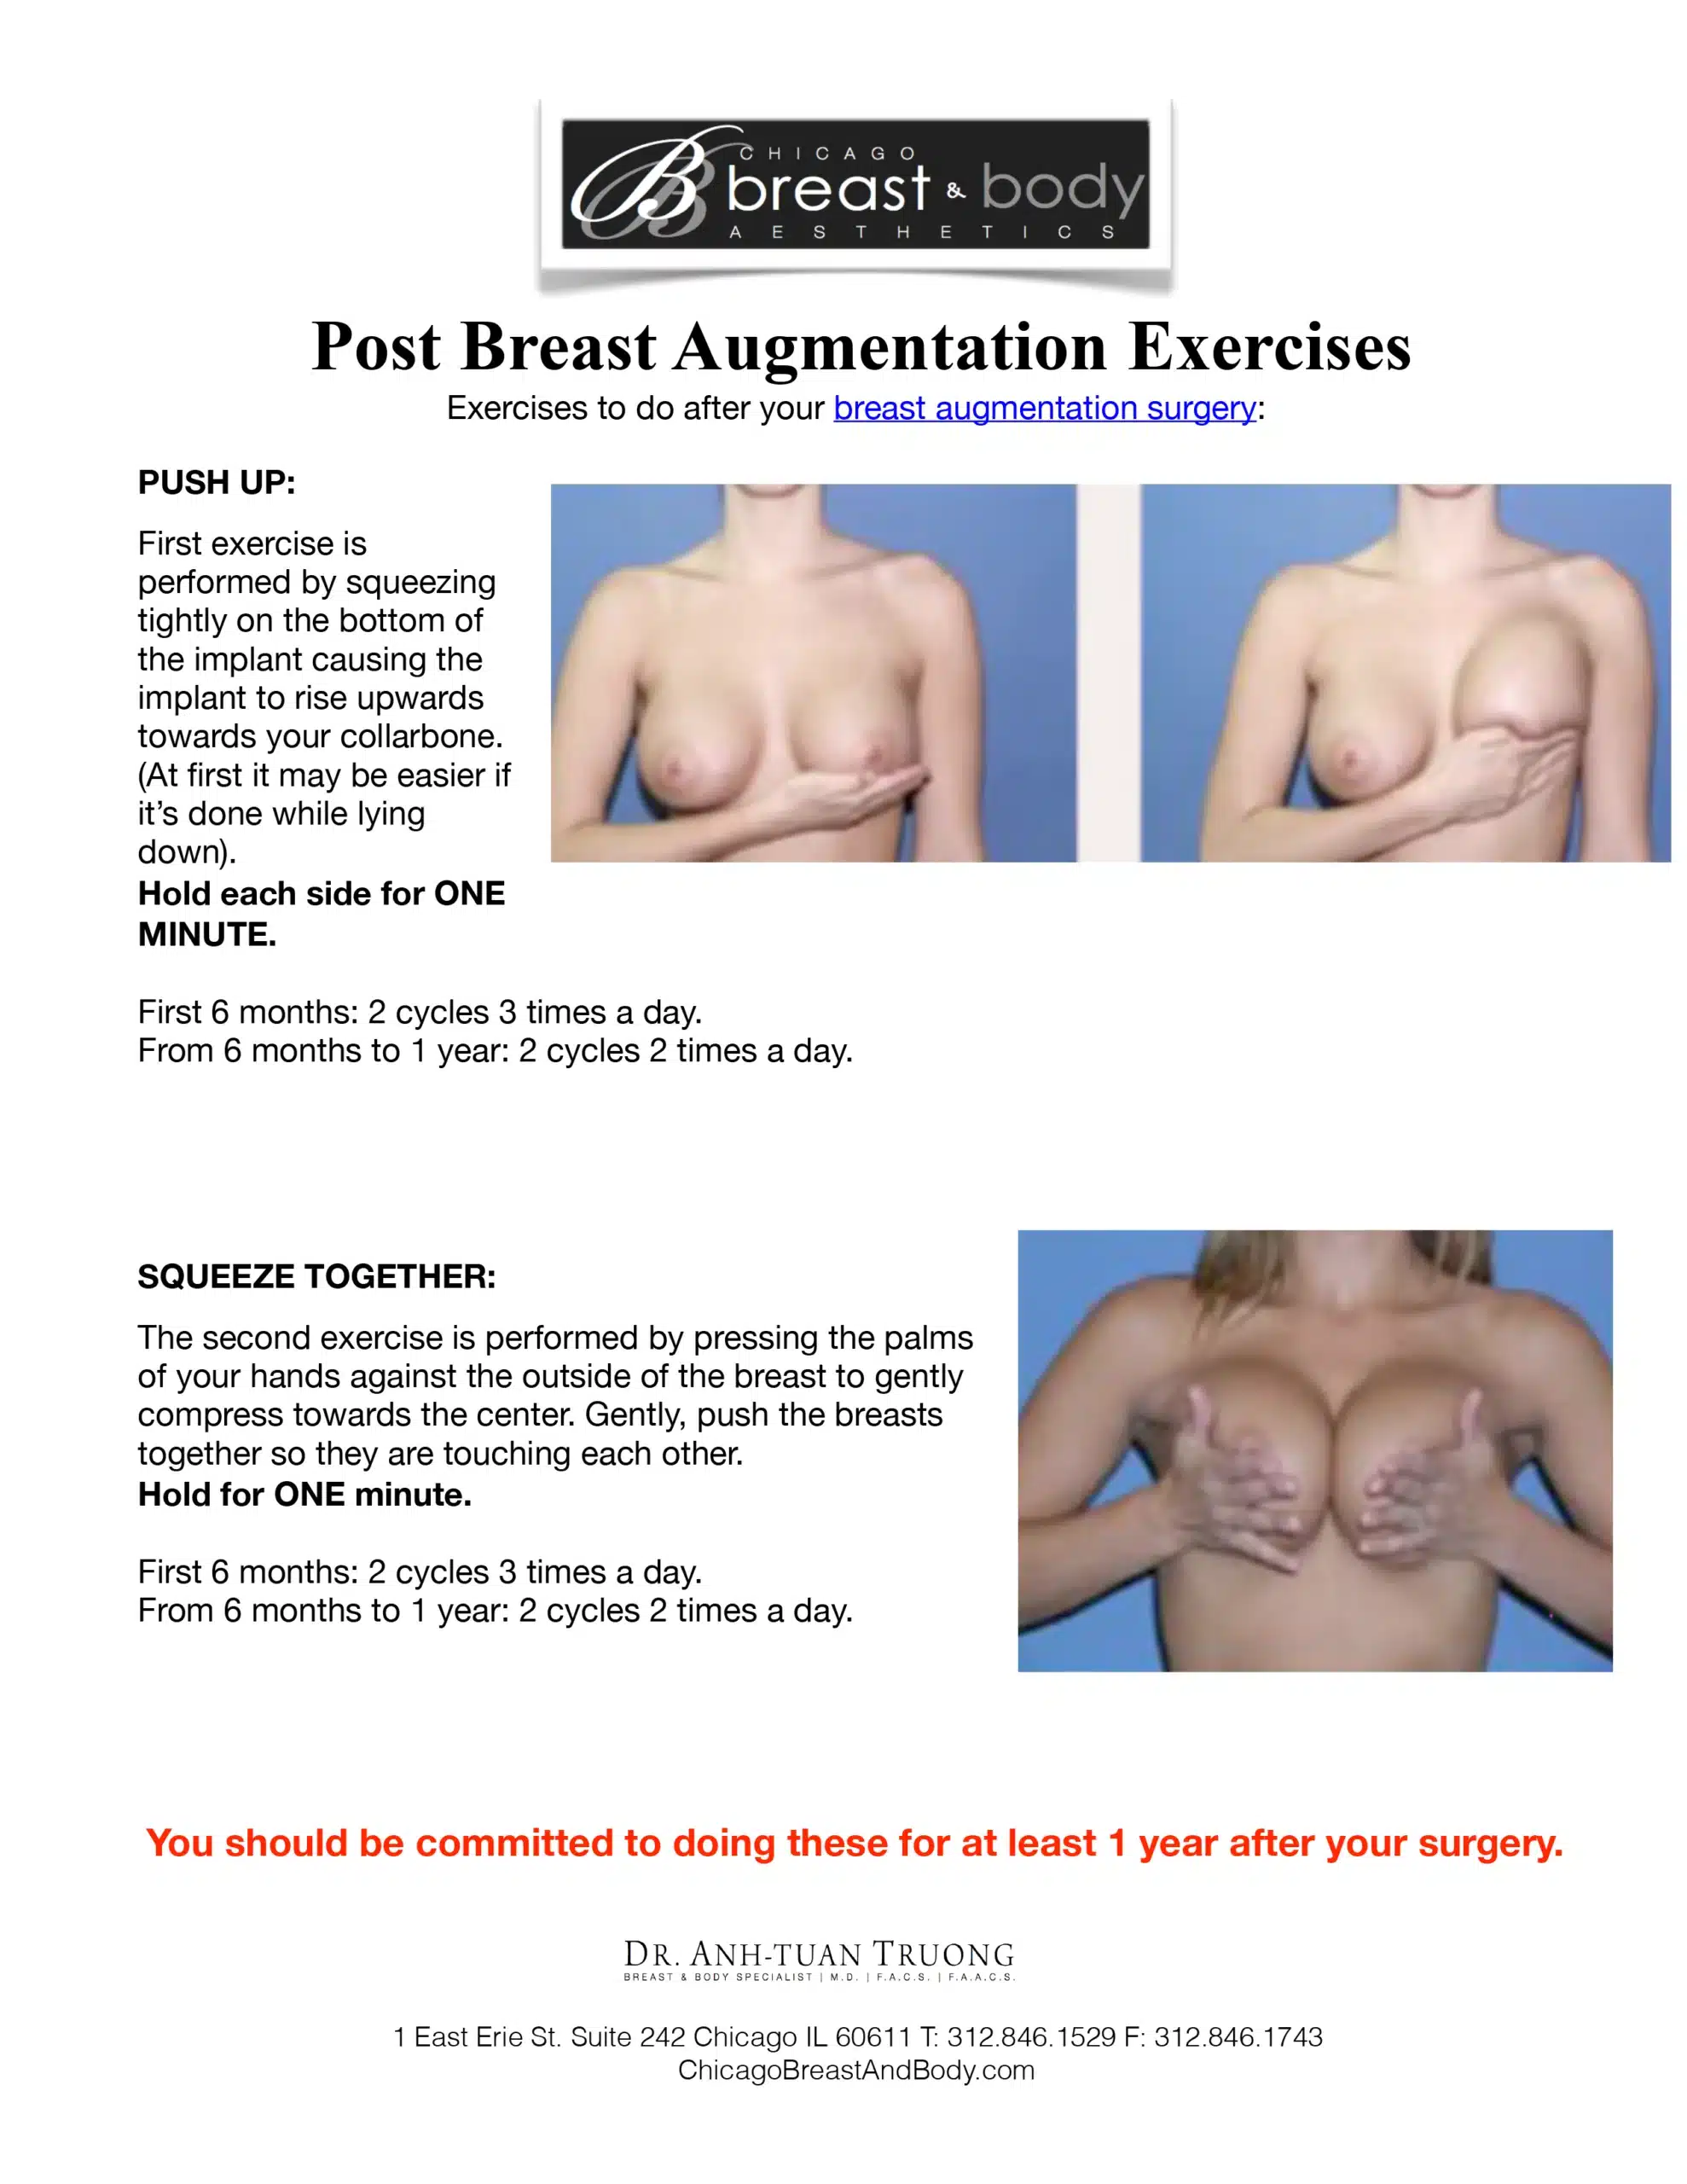 Post breast augmentation exercises